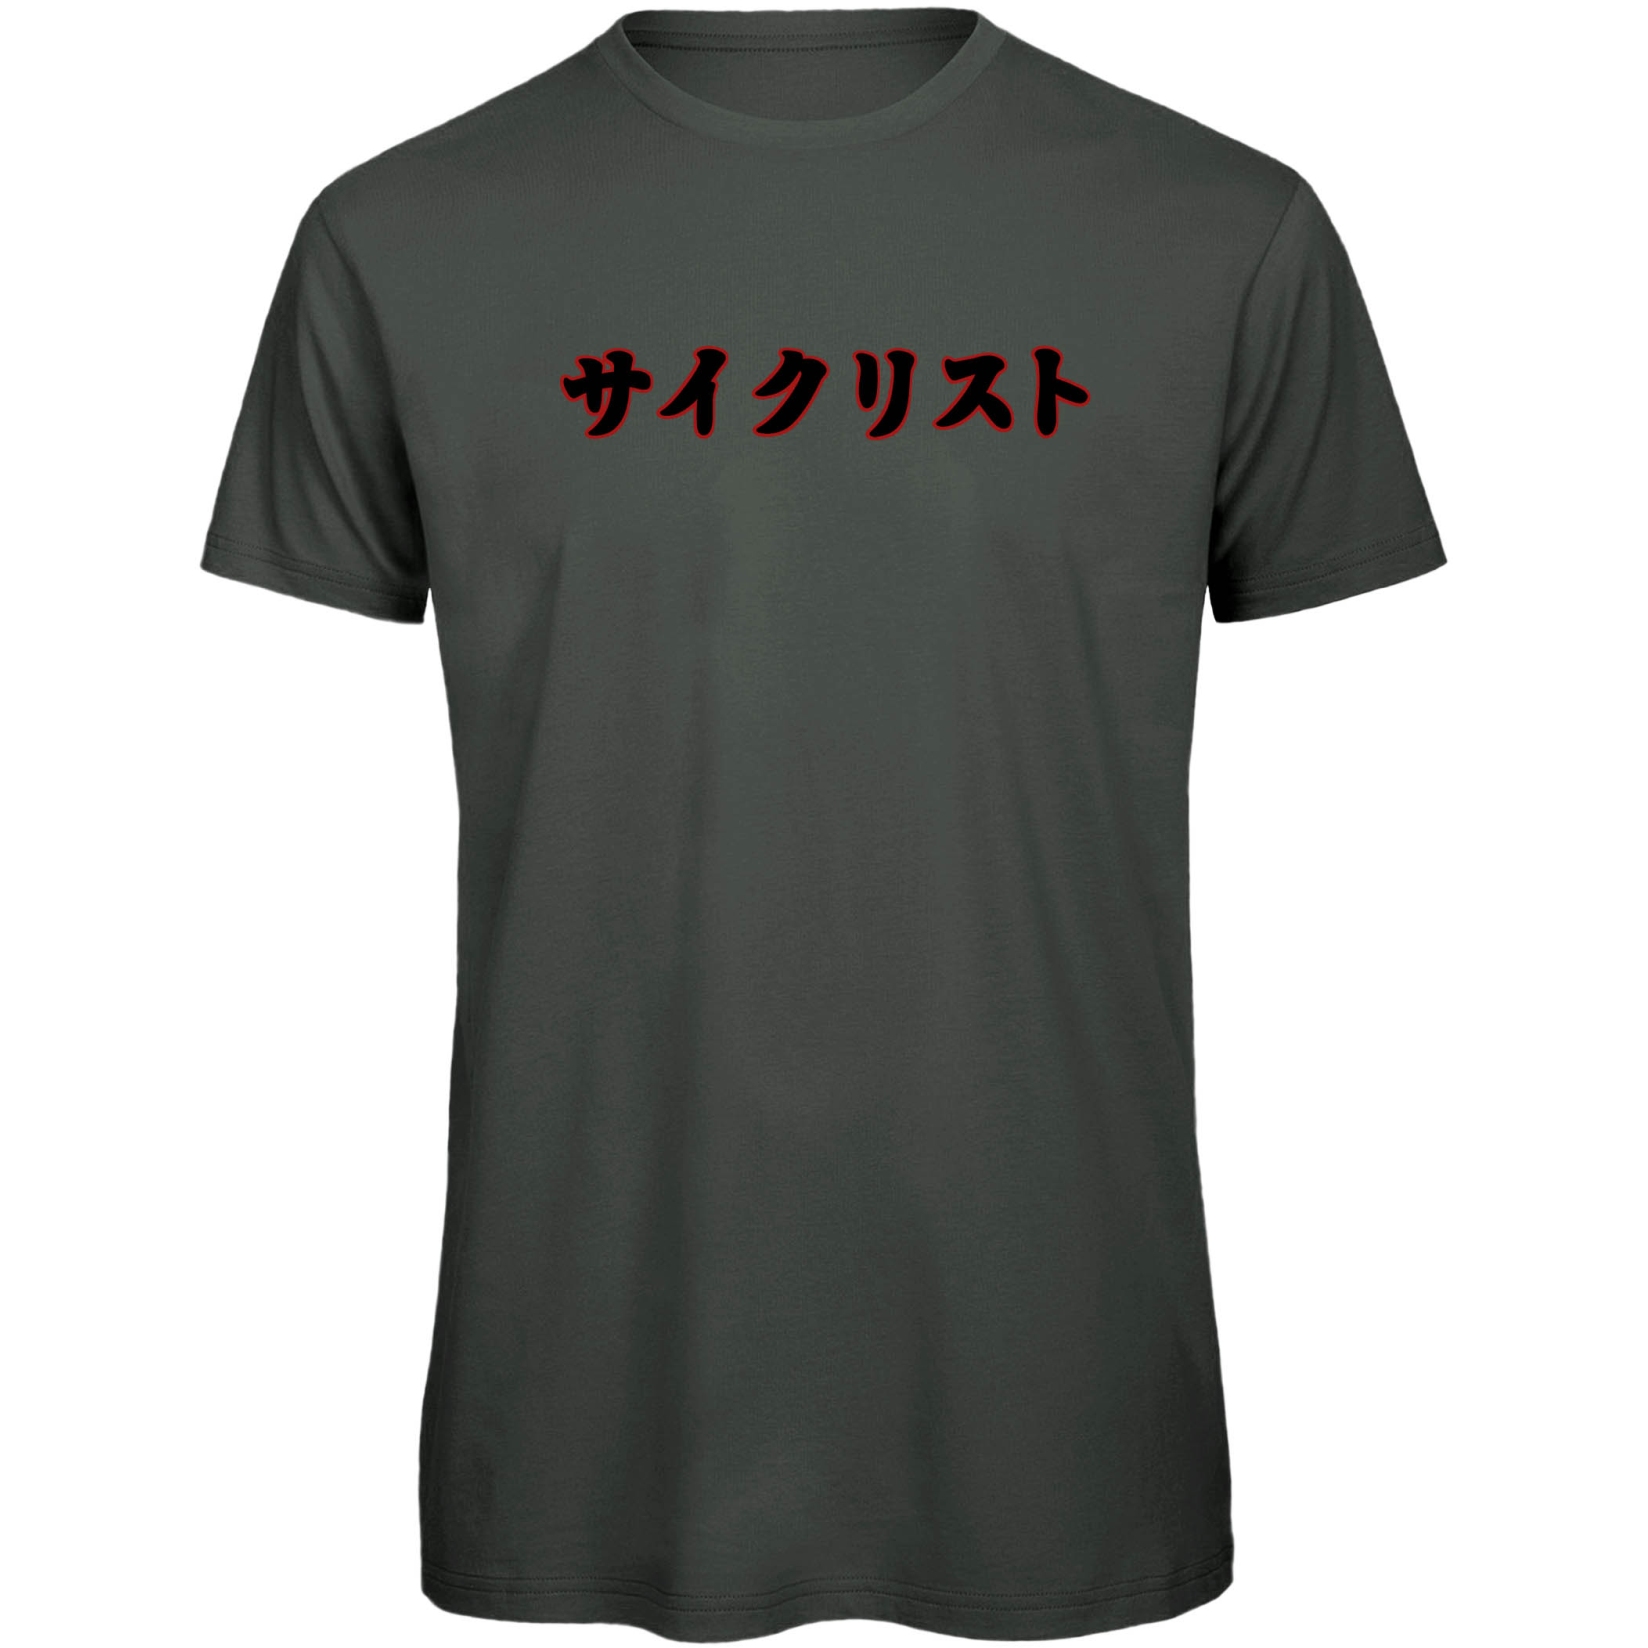 Produktbild von RTTshirts Fahrrad T-Shirt Saikurisuto - dunkelgrau